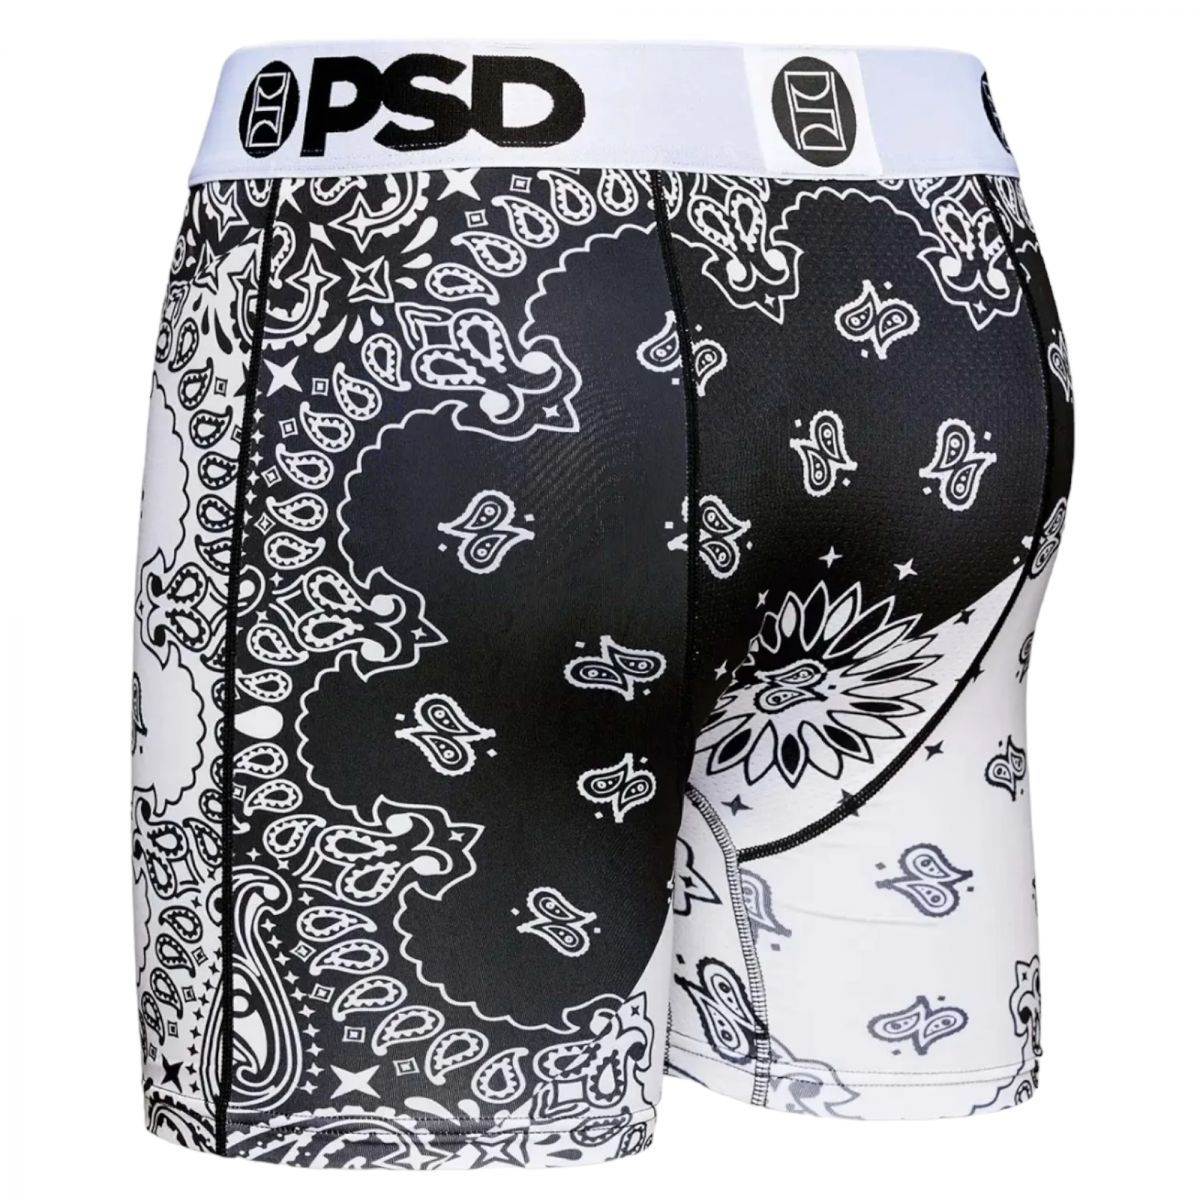 PSD Dr Blk Bandana Boy Shorts Women's Bottom Underwear